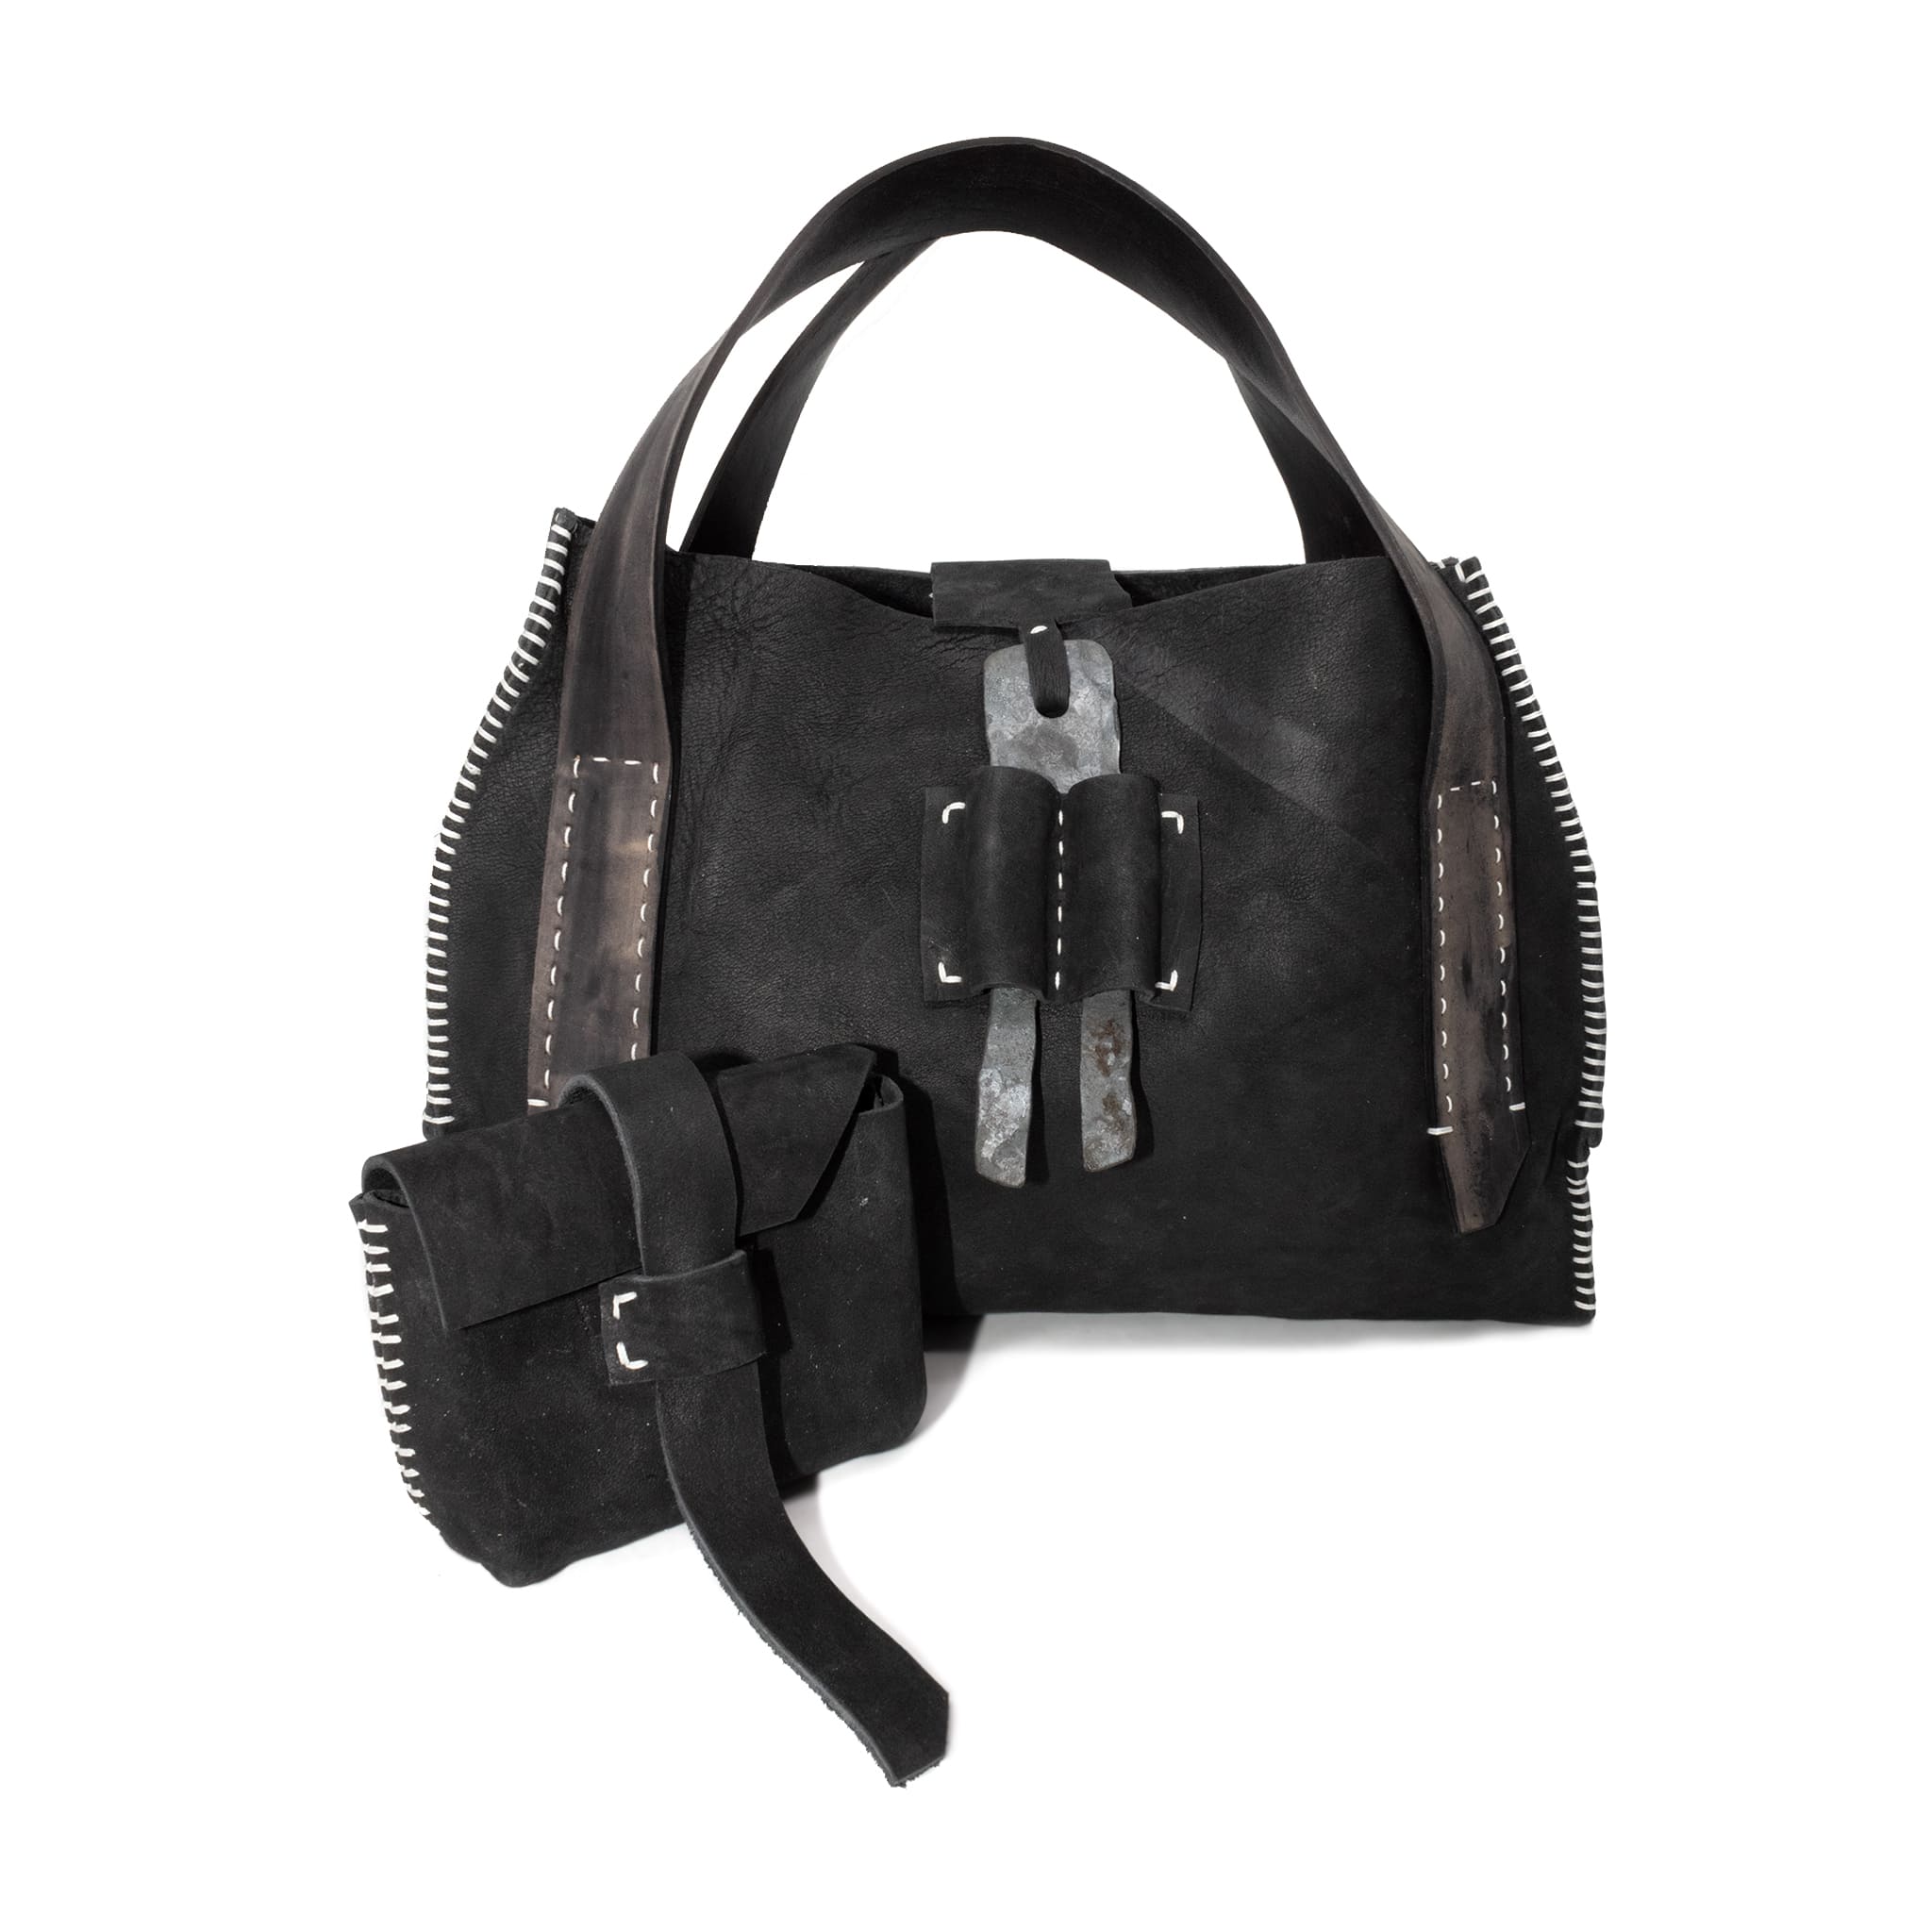 avant garde leather handbag from atelier skn available to buy online.